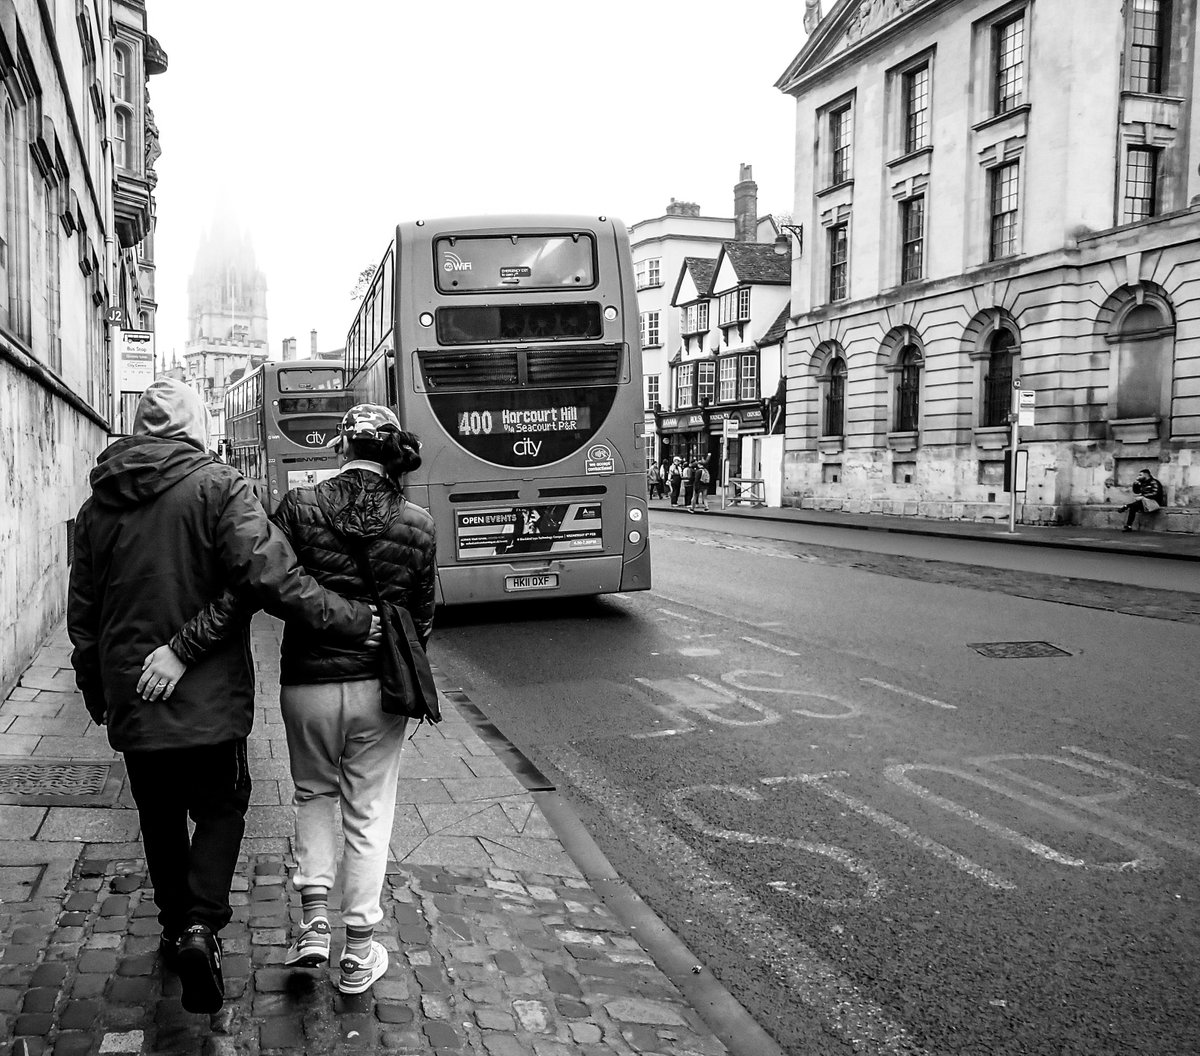 Oxford life 🖤

#streetlife 
#photographingoxford
#oxfordlife
#streetphotographer 
#streetphotography 
#capturestreet 
#blackandwhitephotography 
#oxfordhighstreet
#oxfordstreets
#streetphoto 
#candid 
#candidcapture
#street_avengers
#mycity
#street_badass
#love
#shadowmagazine